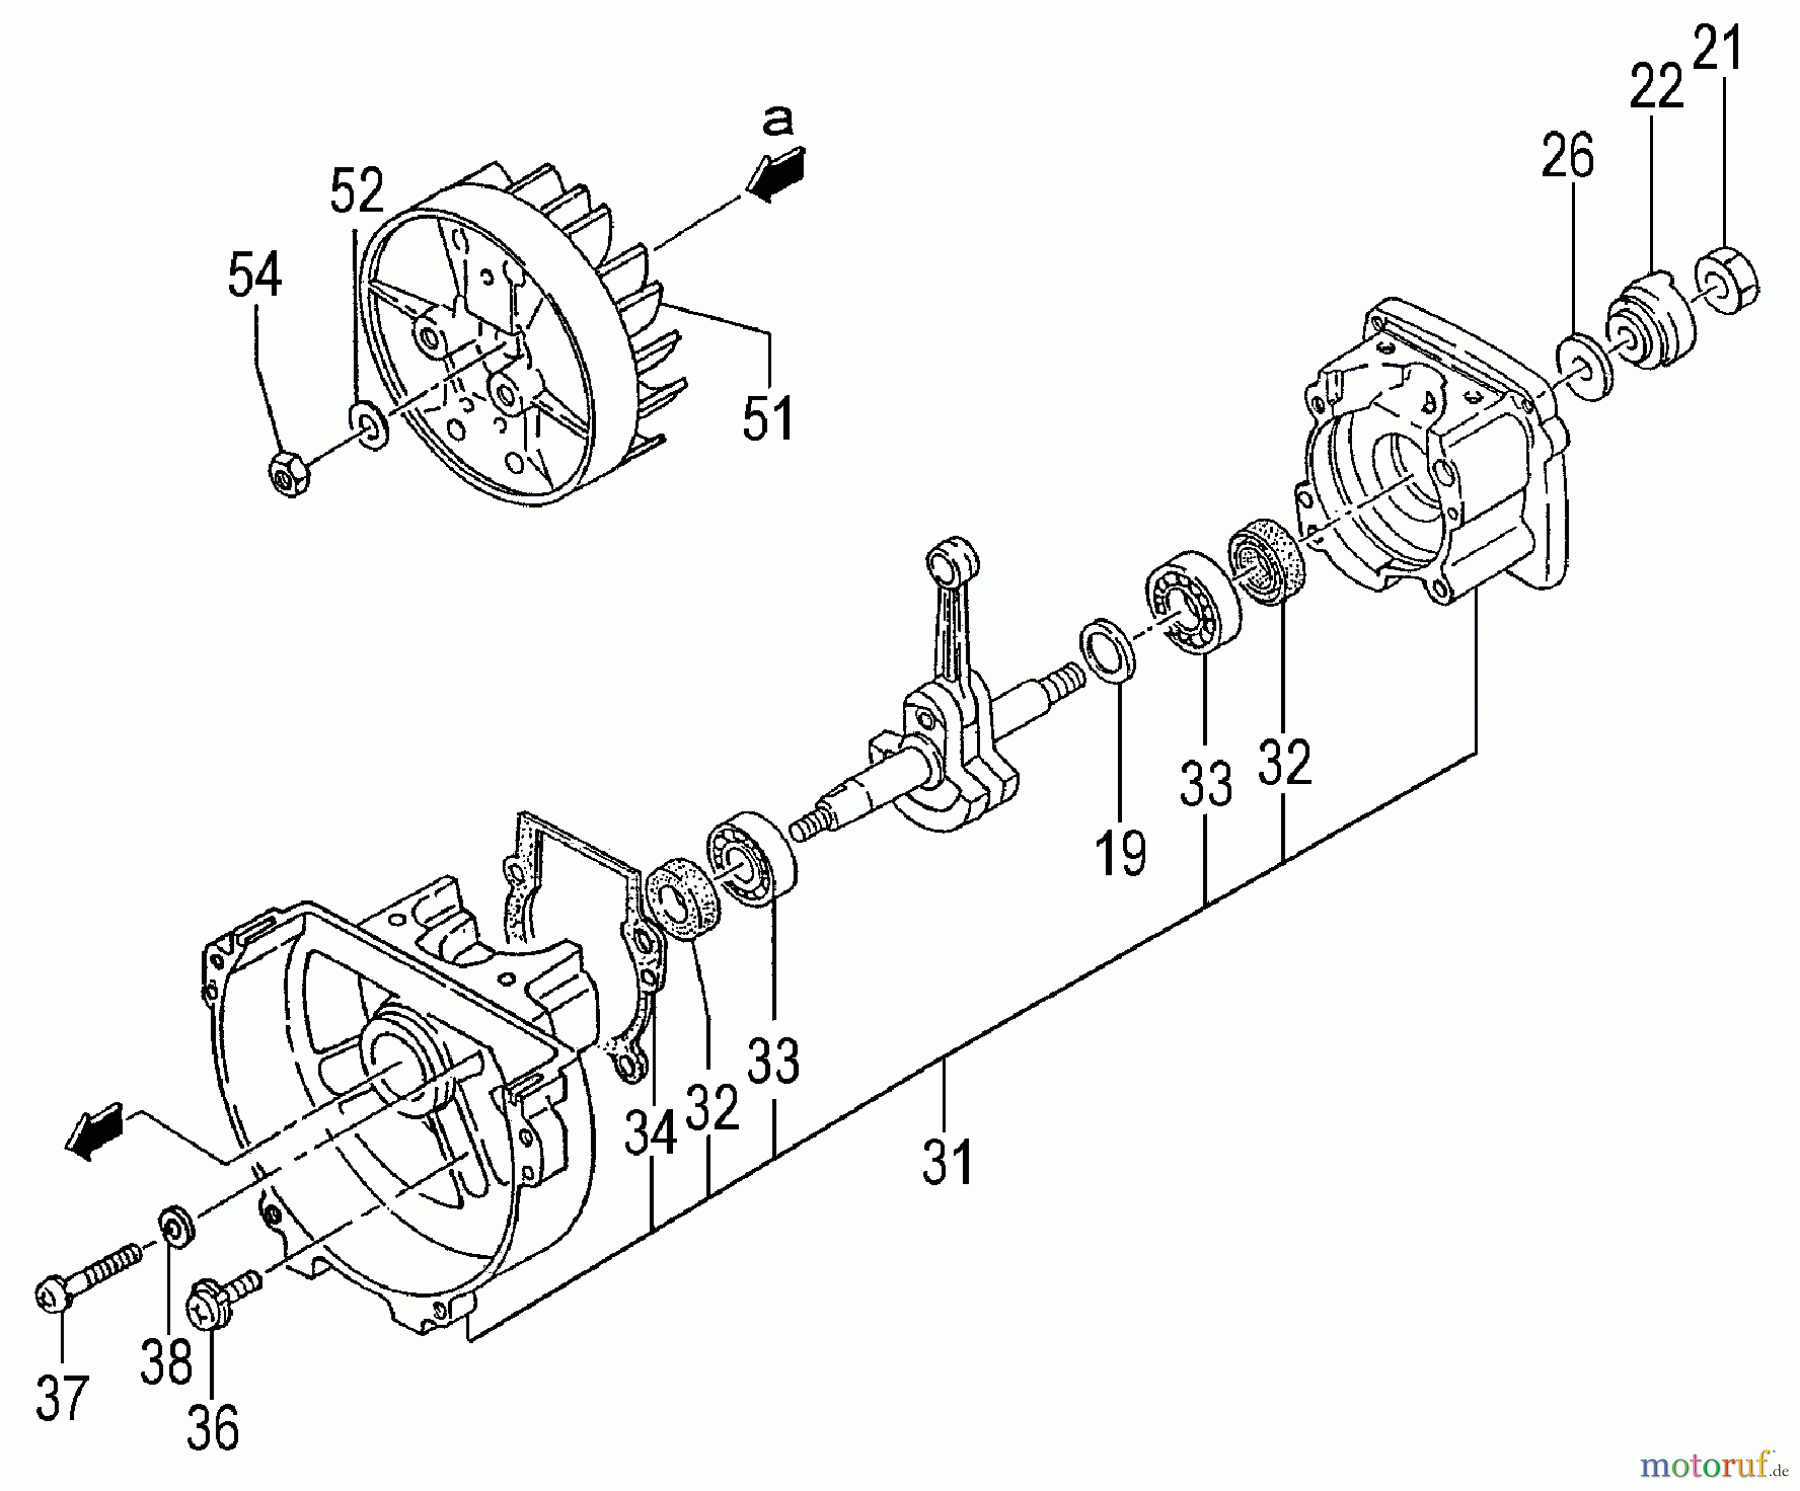  Tanaka Motoren PF-2600 - Tanaka Utility / Scooter Engine Crankcase, Flywheel, Starter Pulley